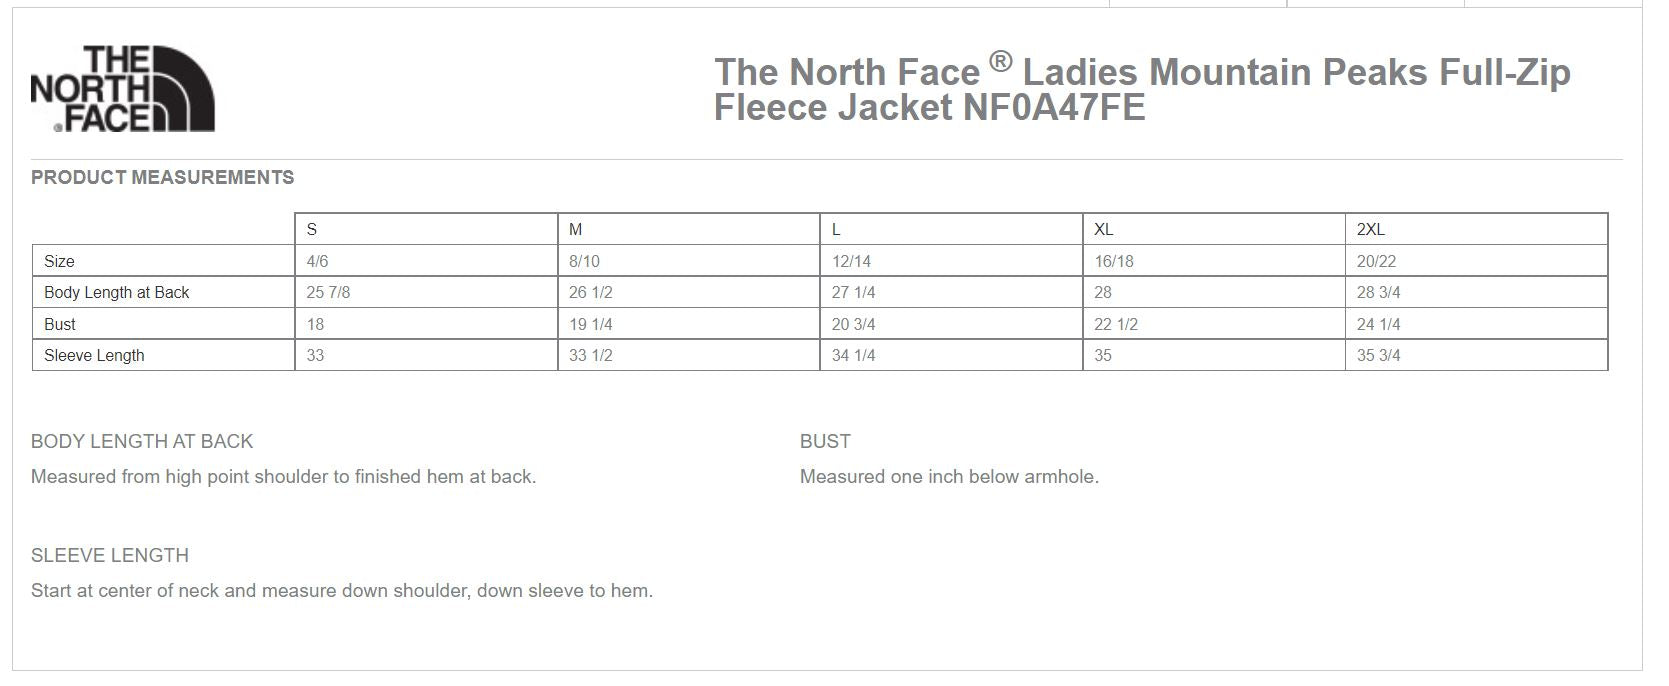 Custom The North Face Women's Mountain Peaks Fleece Full-Zip Jacket